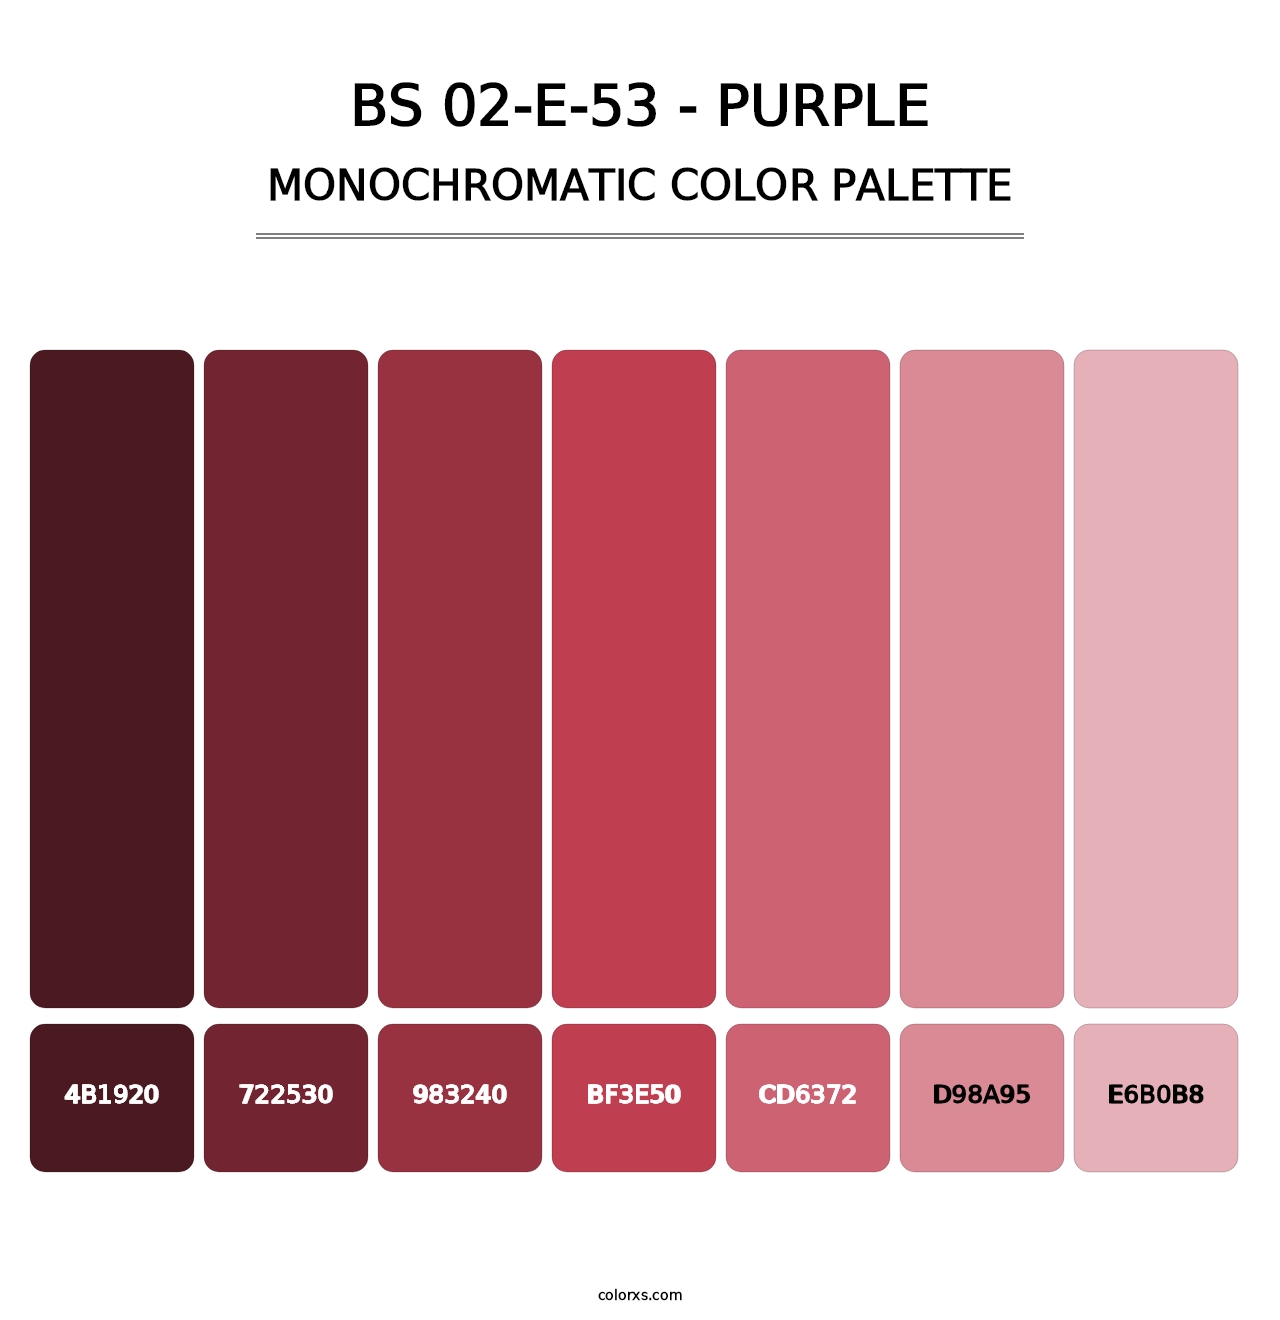 BS 02-E-53 - Purple - Monochromatic Color Palette